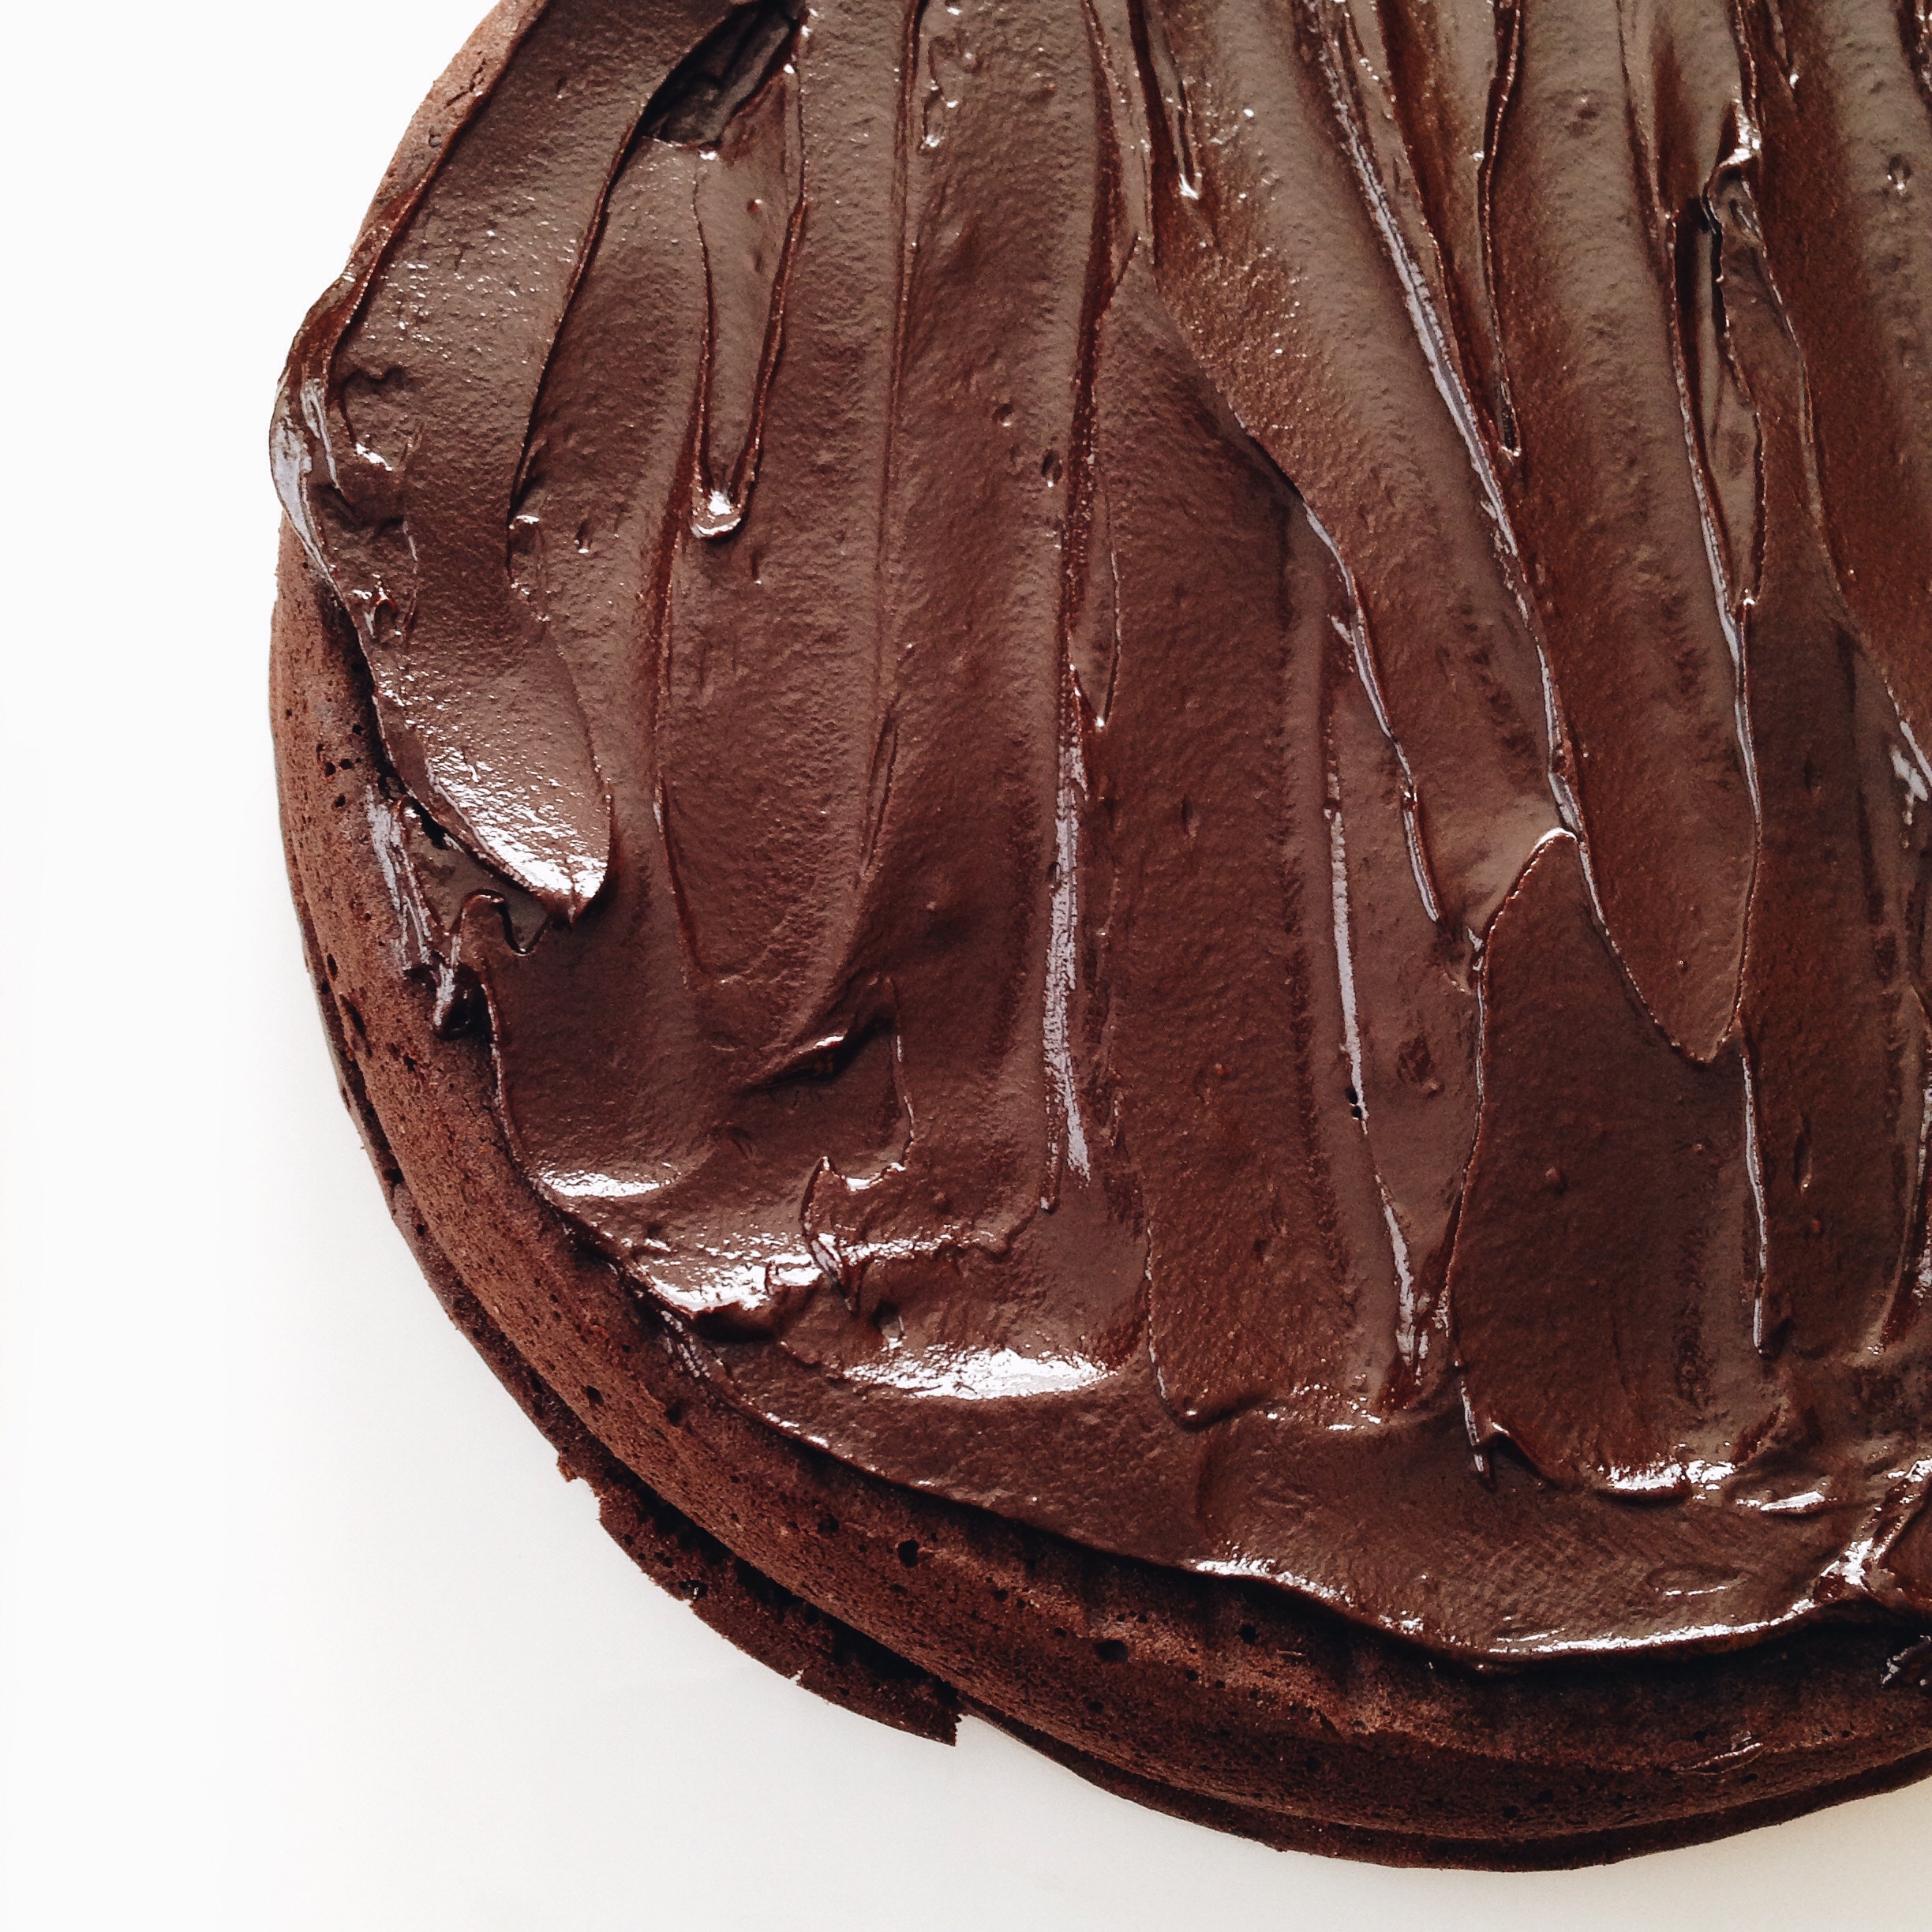 flourless chocolate rum cake.